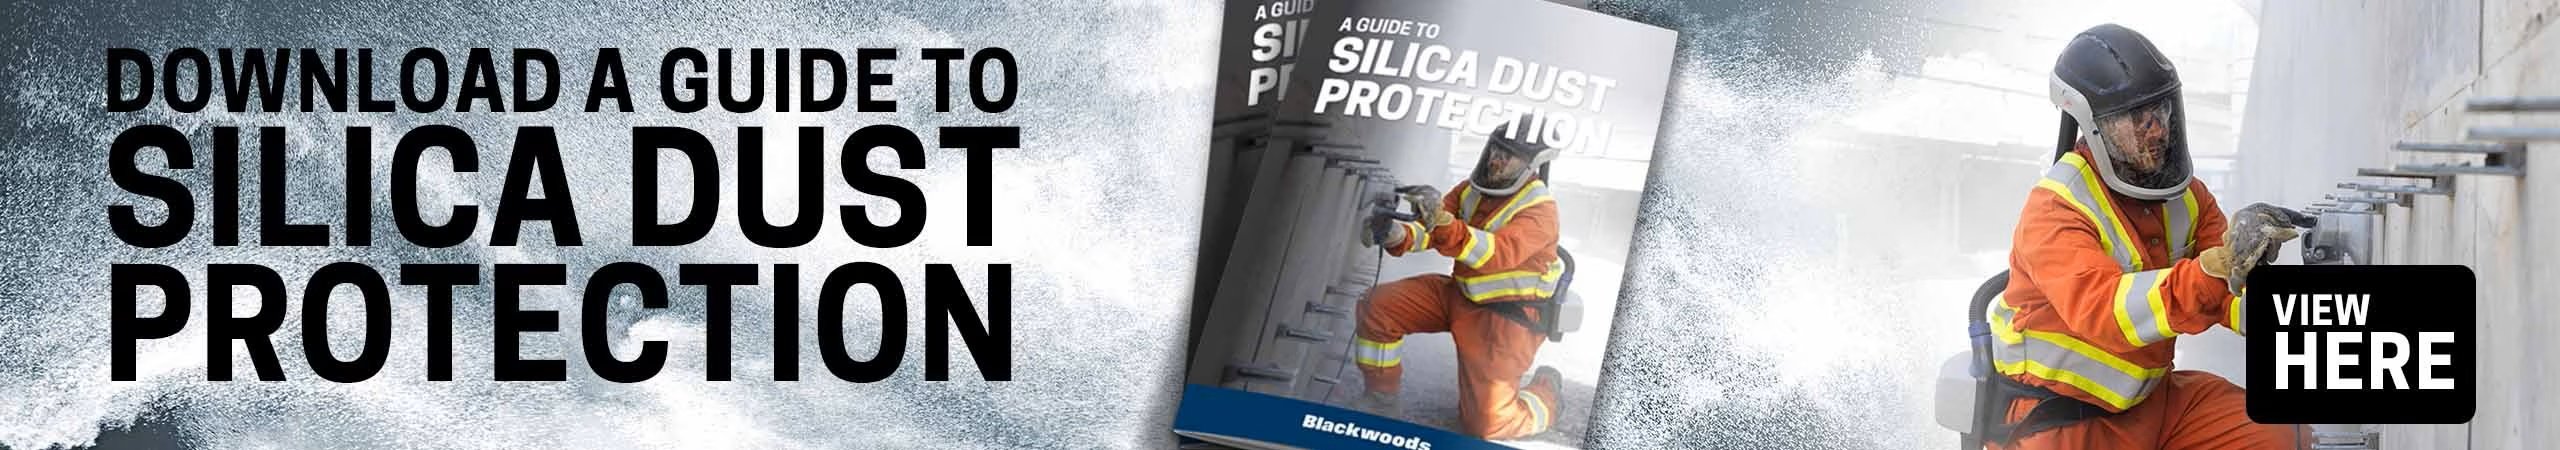 silica dust brochure